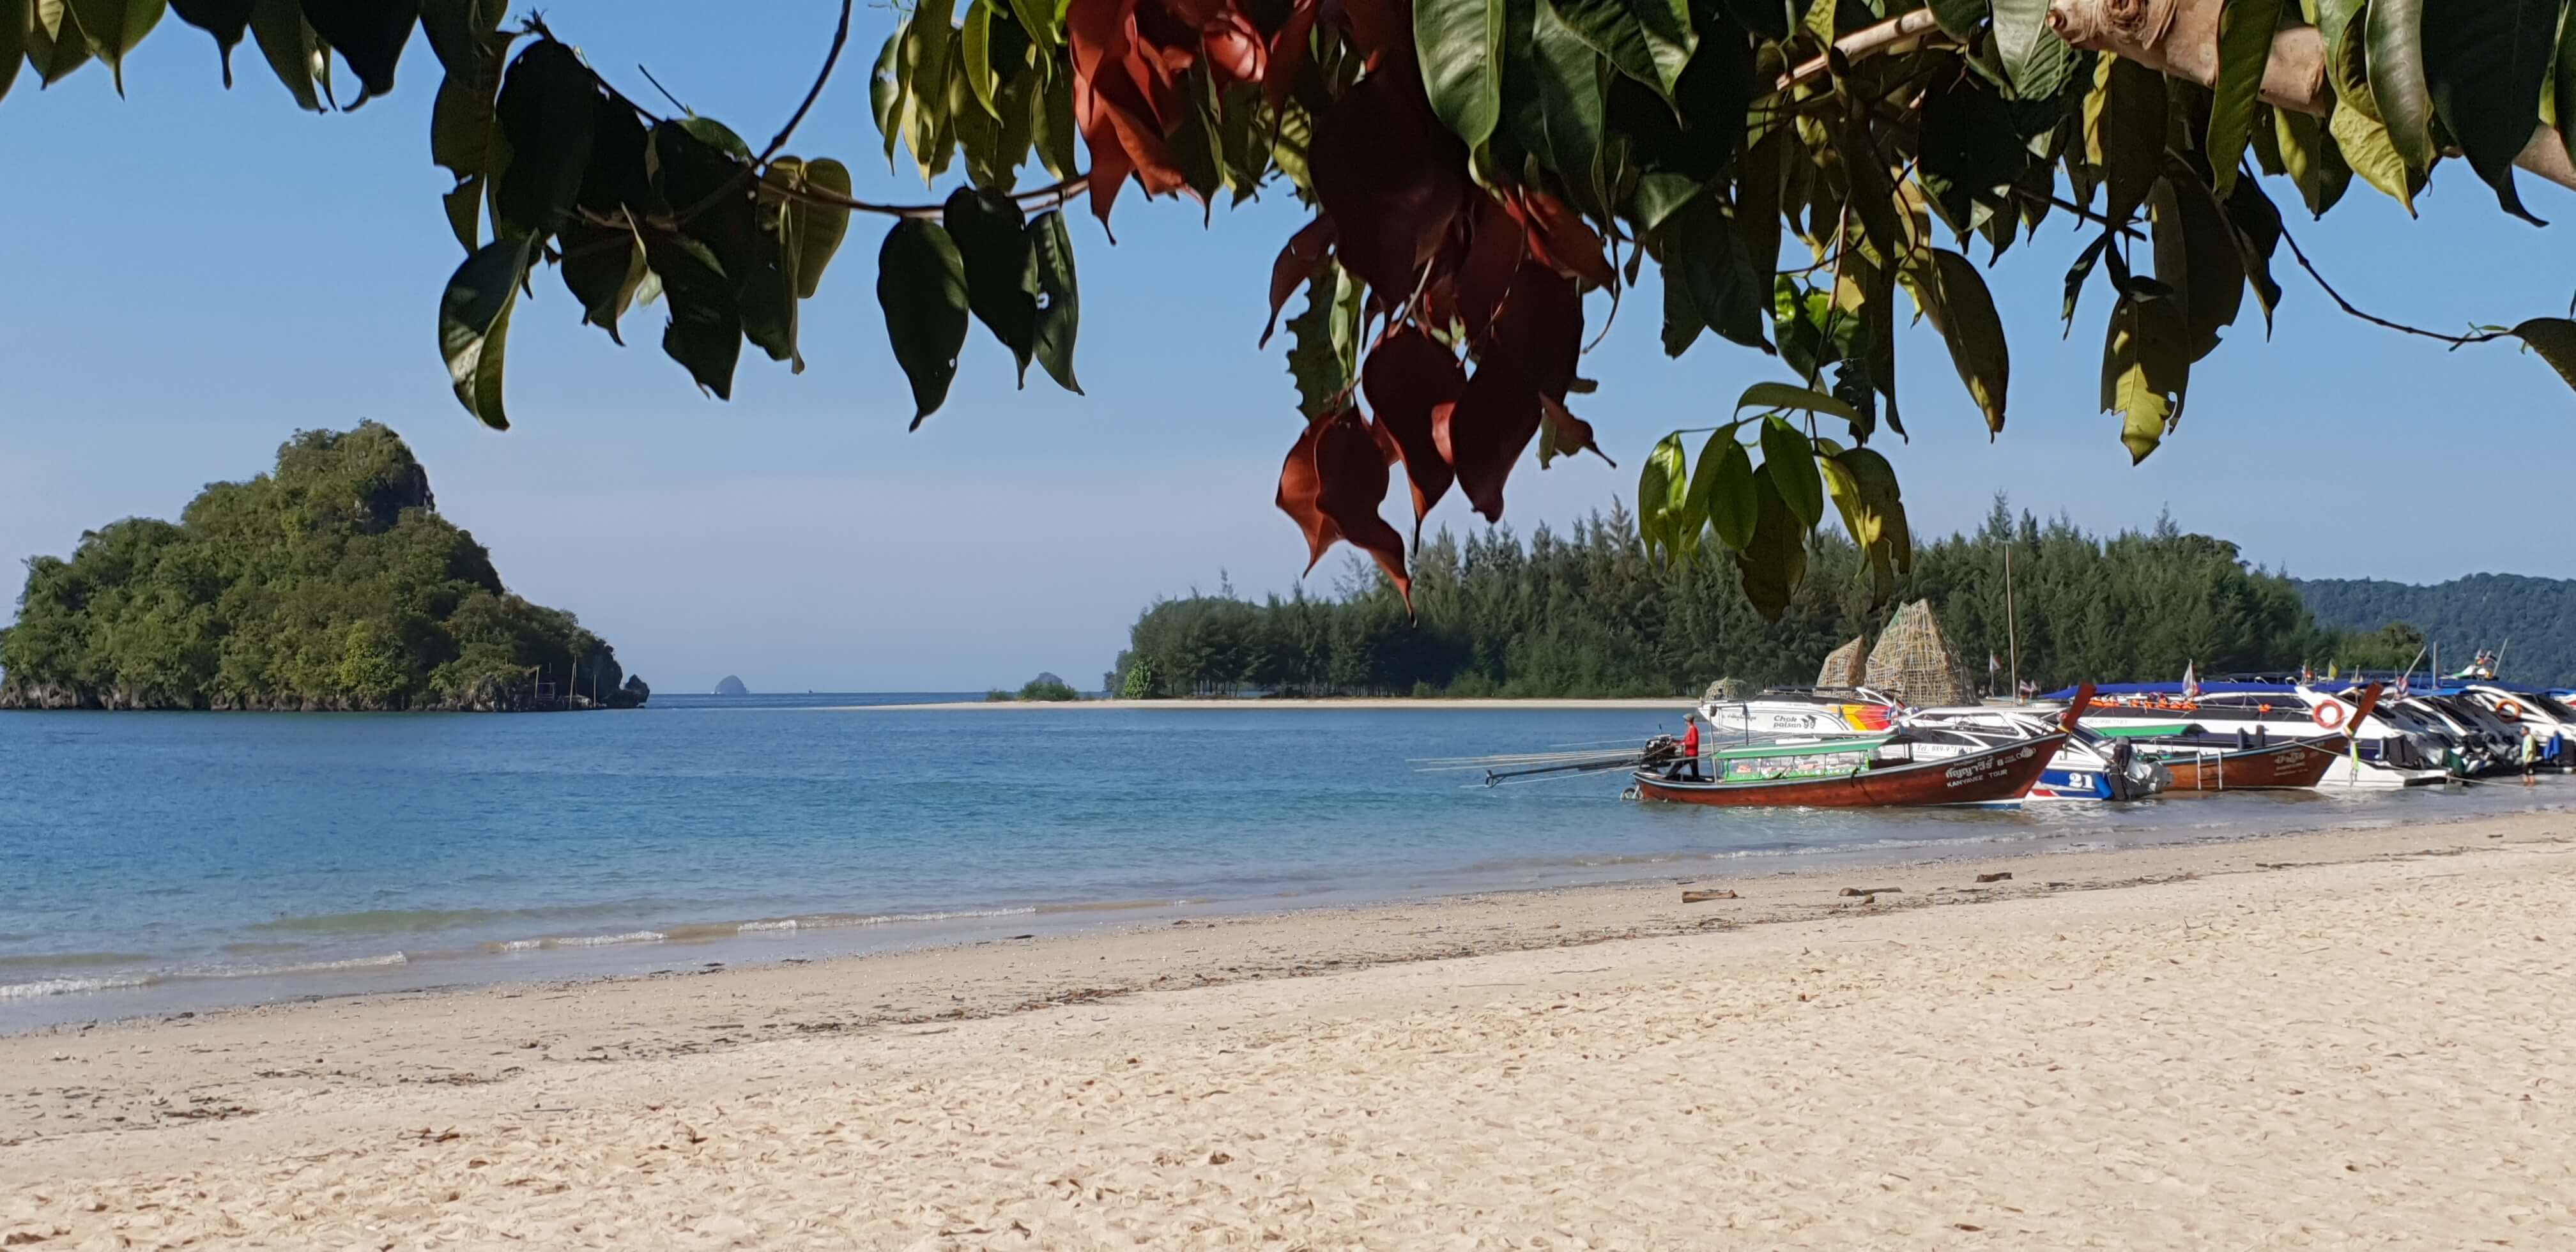 The day trip from Krabi to Phi Phi island starts from the Nopparat Thara Pier at Ao Nang beach